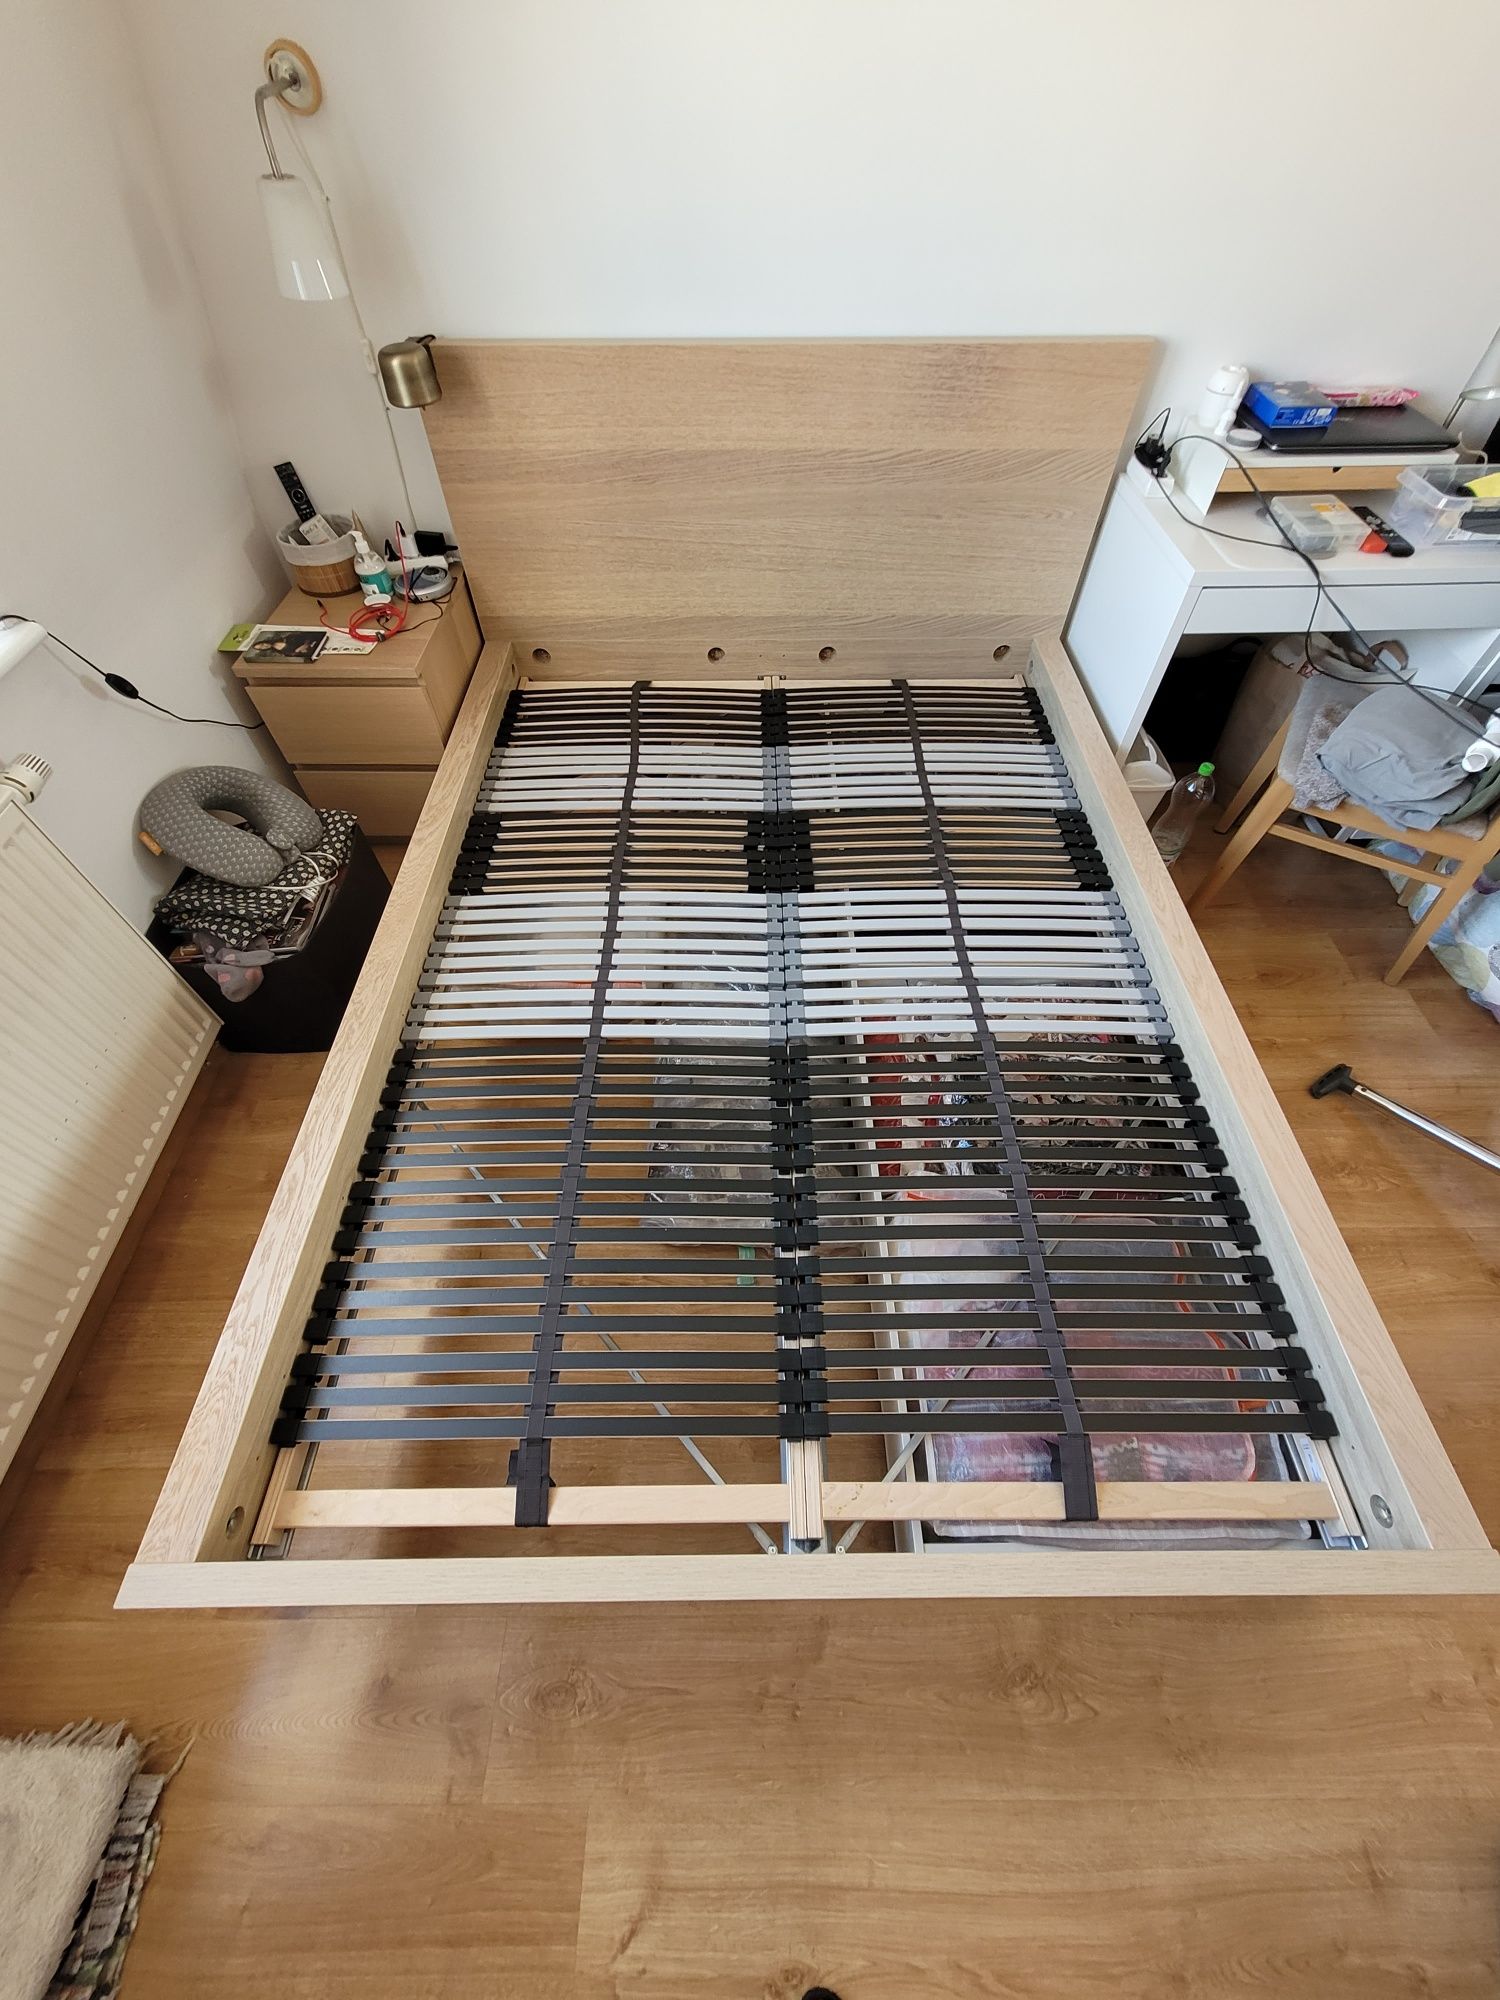 Rama łóżka MALM (Ikea)